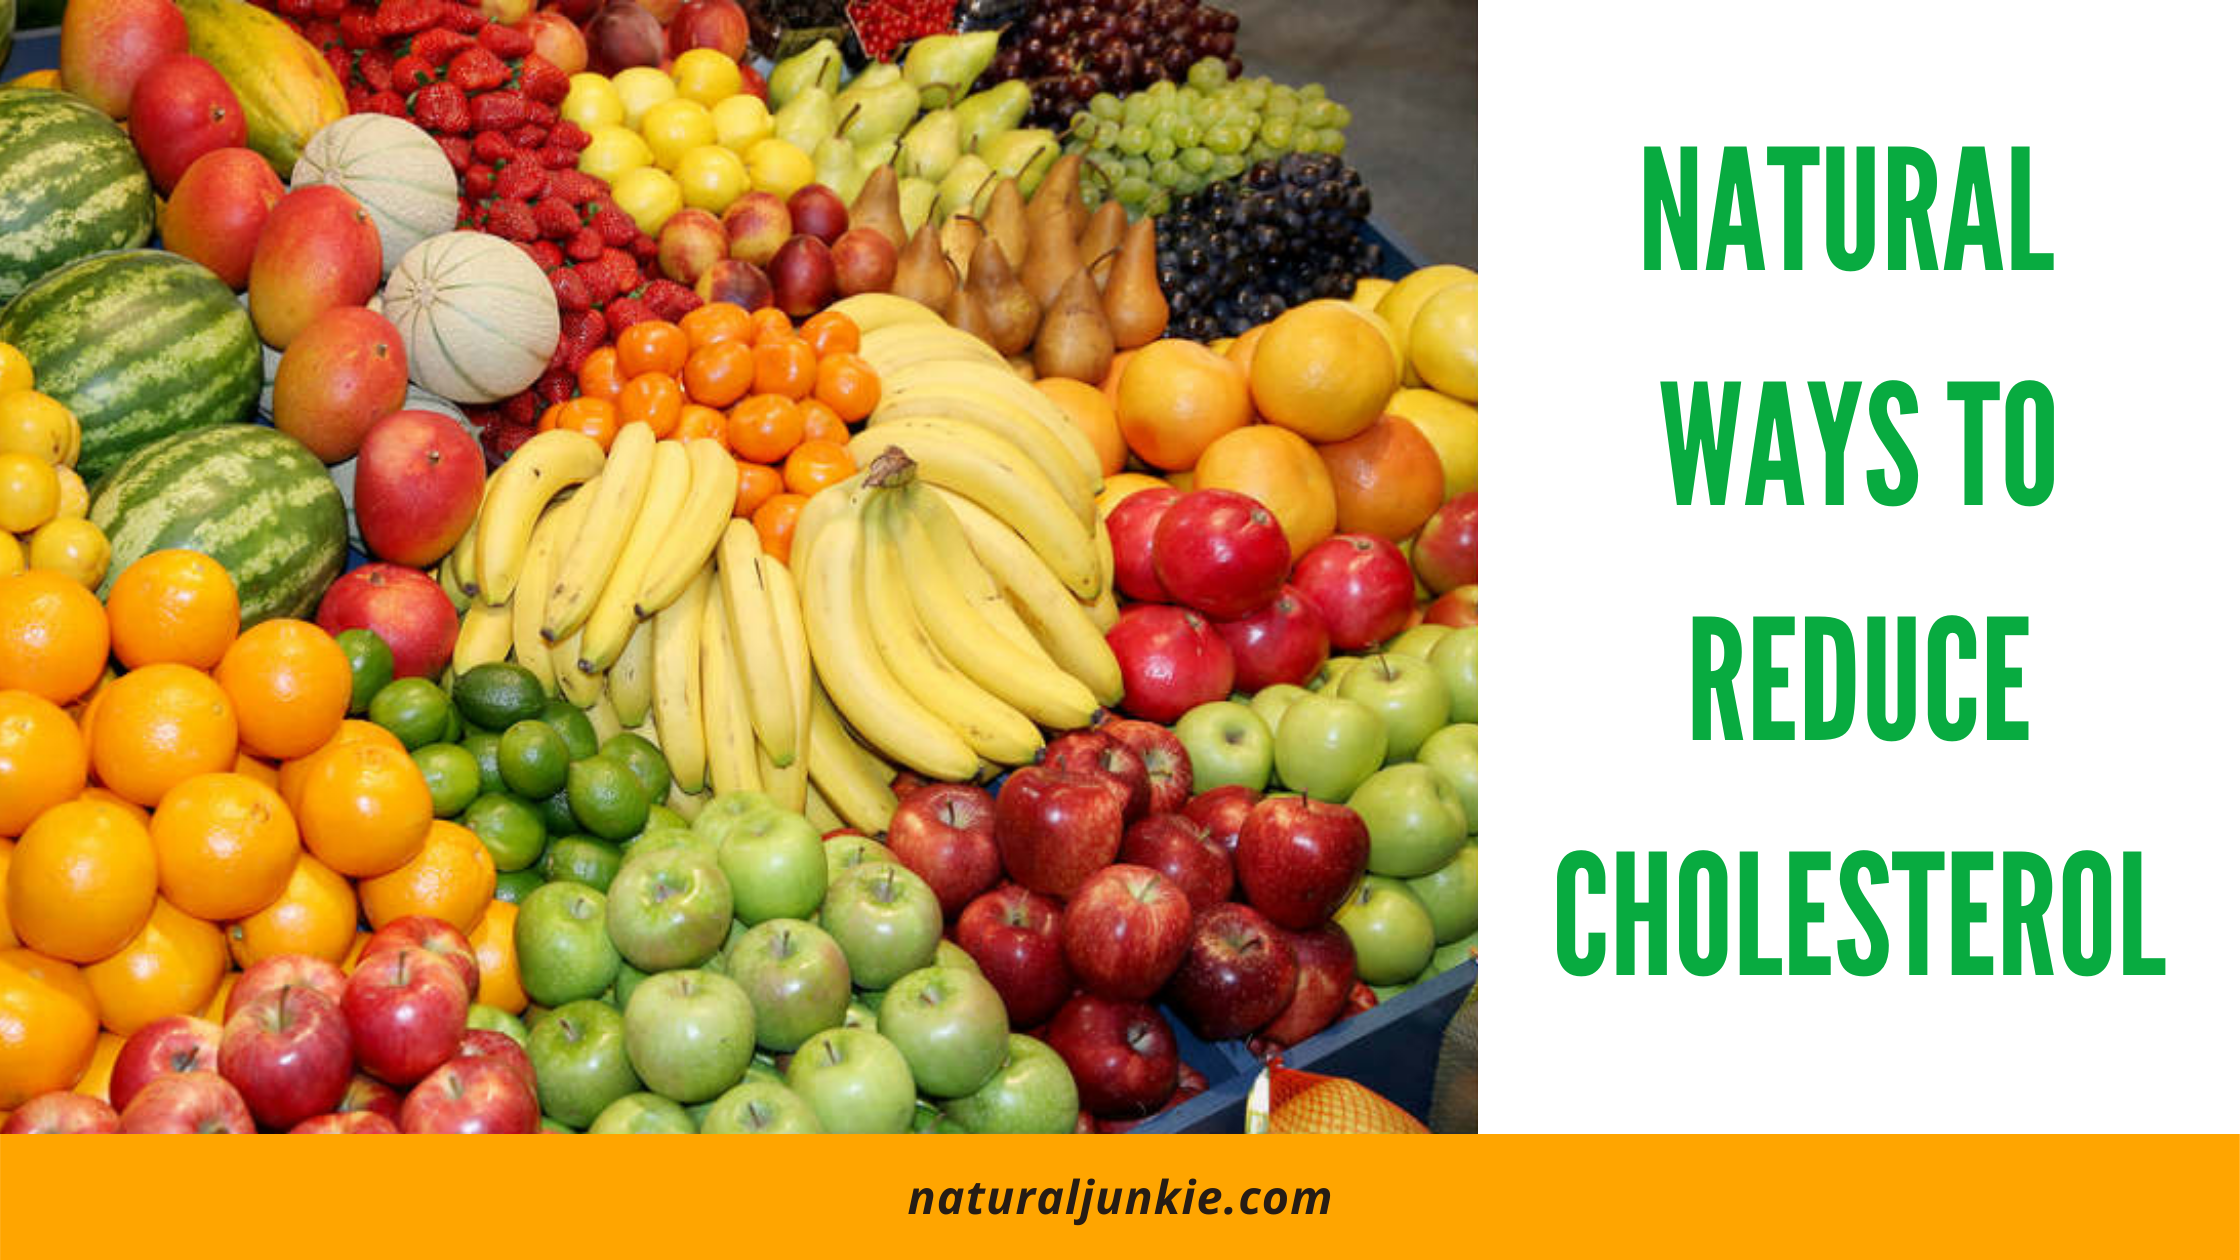 Natural Ways to Reduce Cholesterol